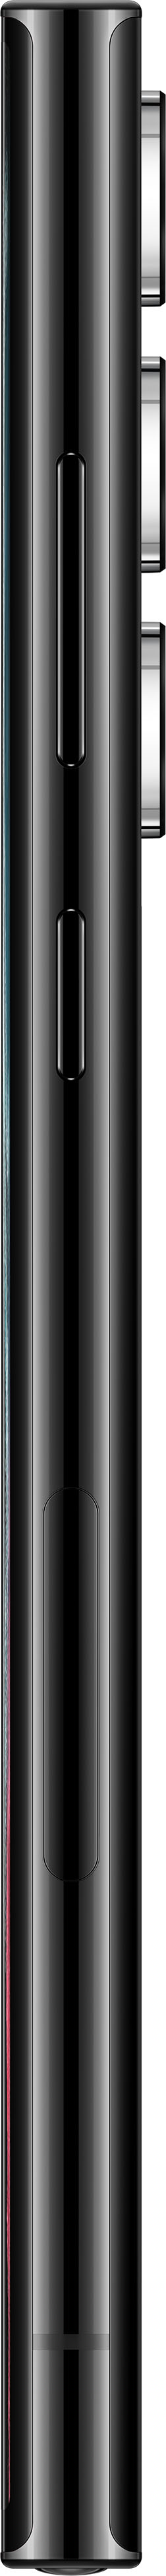 Samsung - Galaxy S22 Ultra 128GB - Phantom Black (at&t)